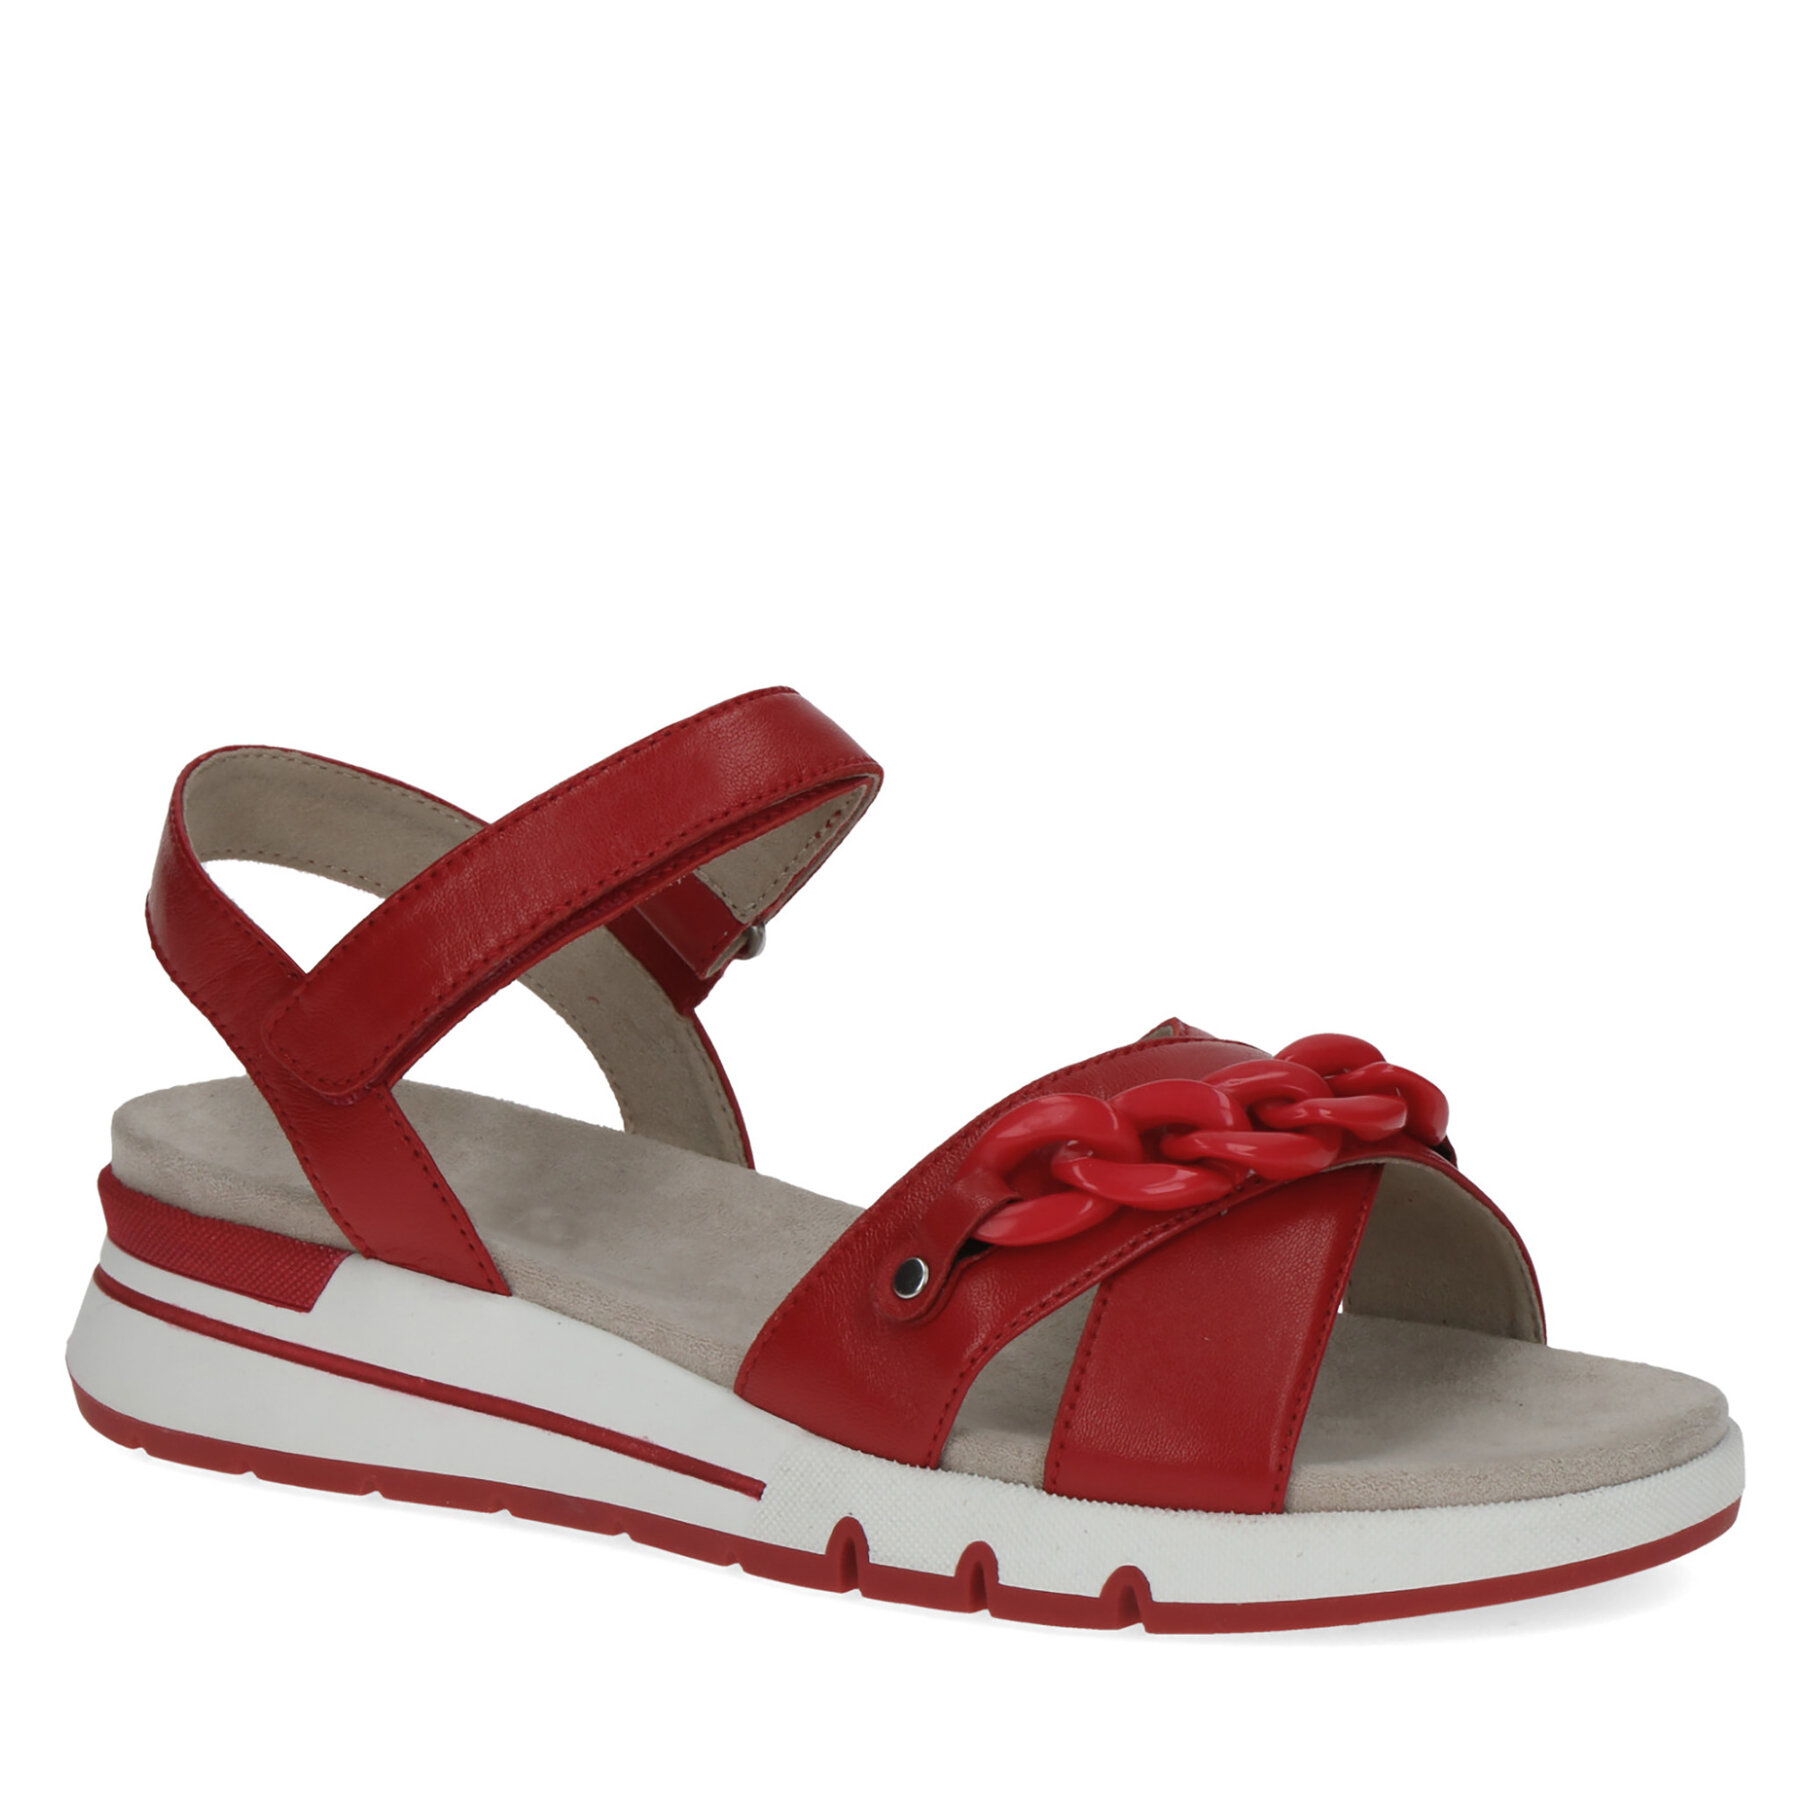 Sandale Caprice 9-28750-20 Red Softnappa 525